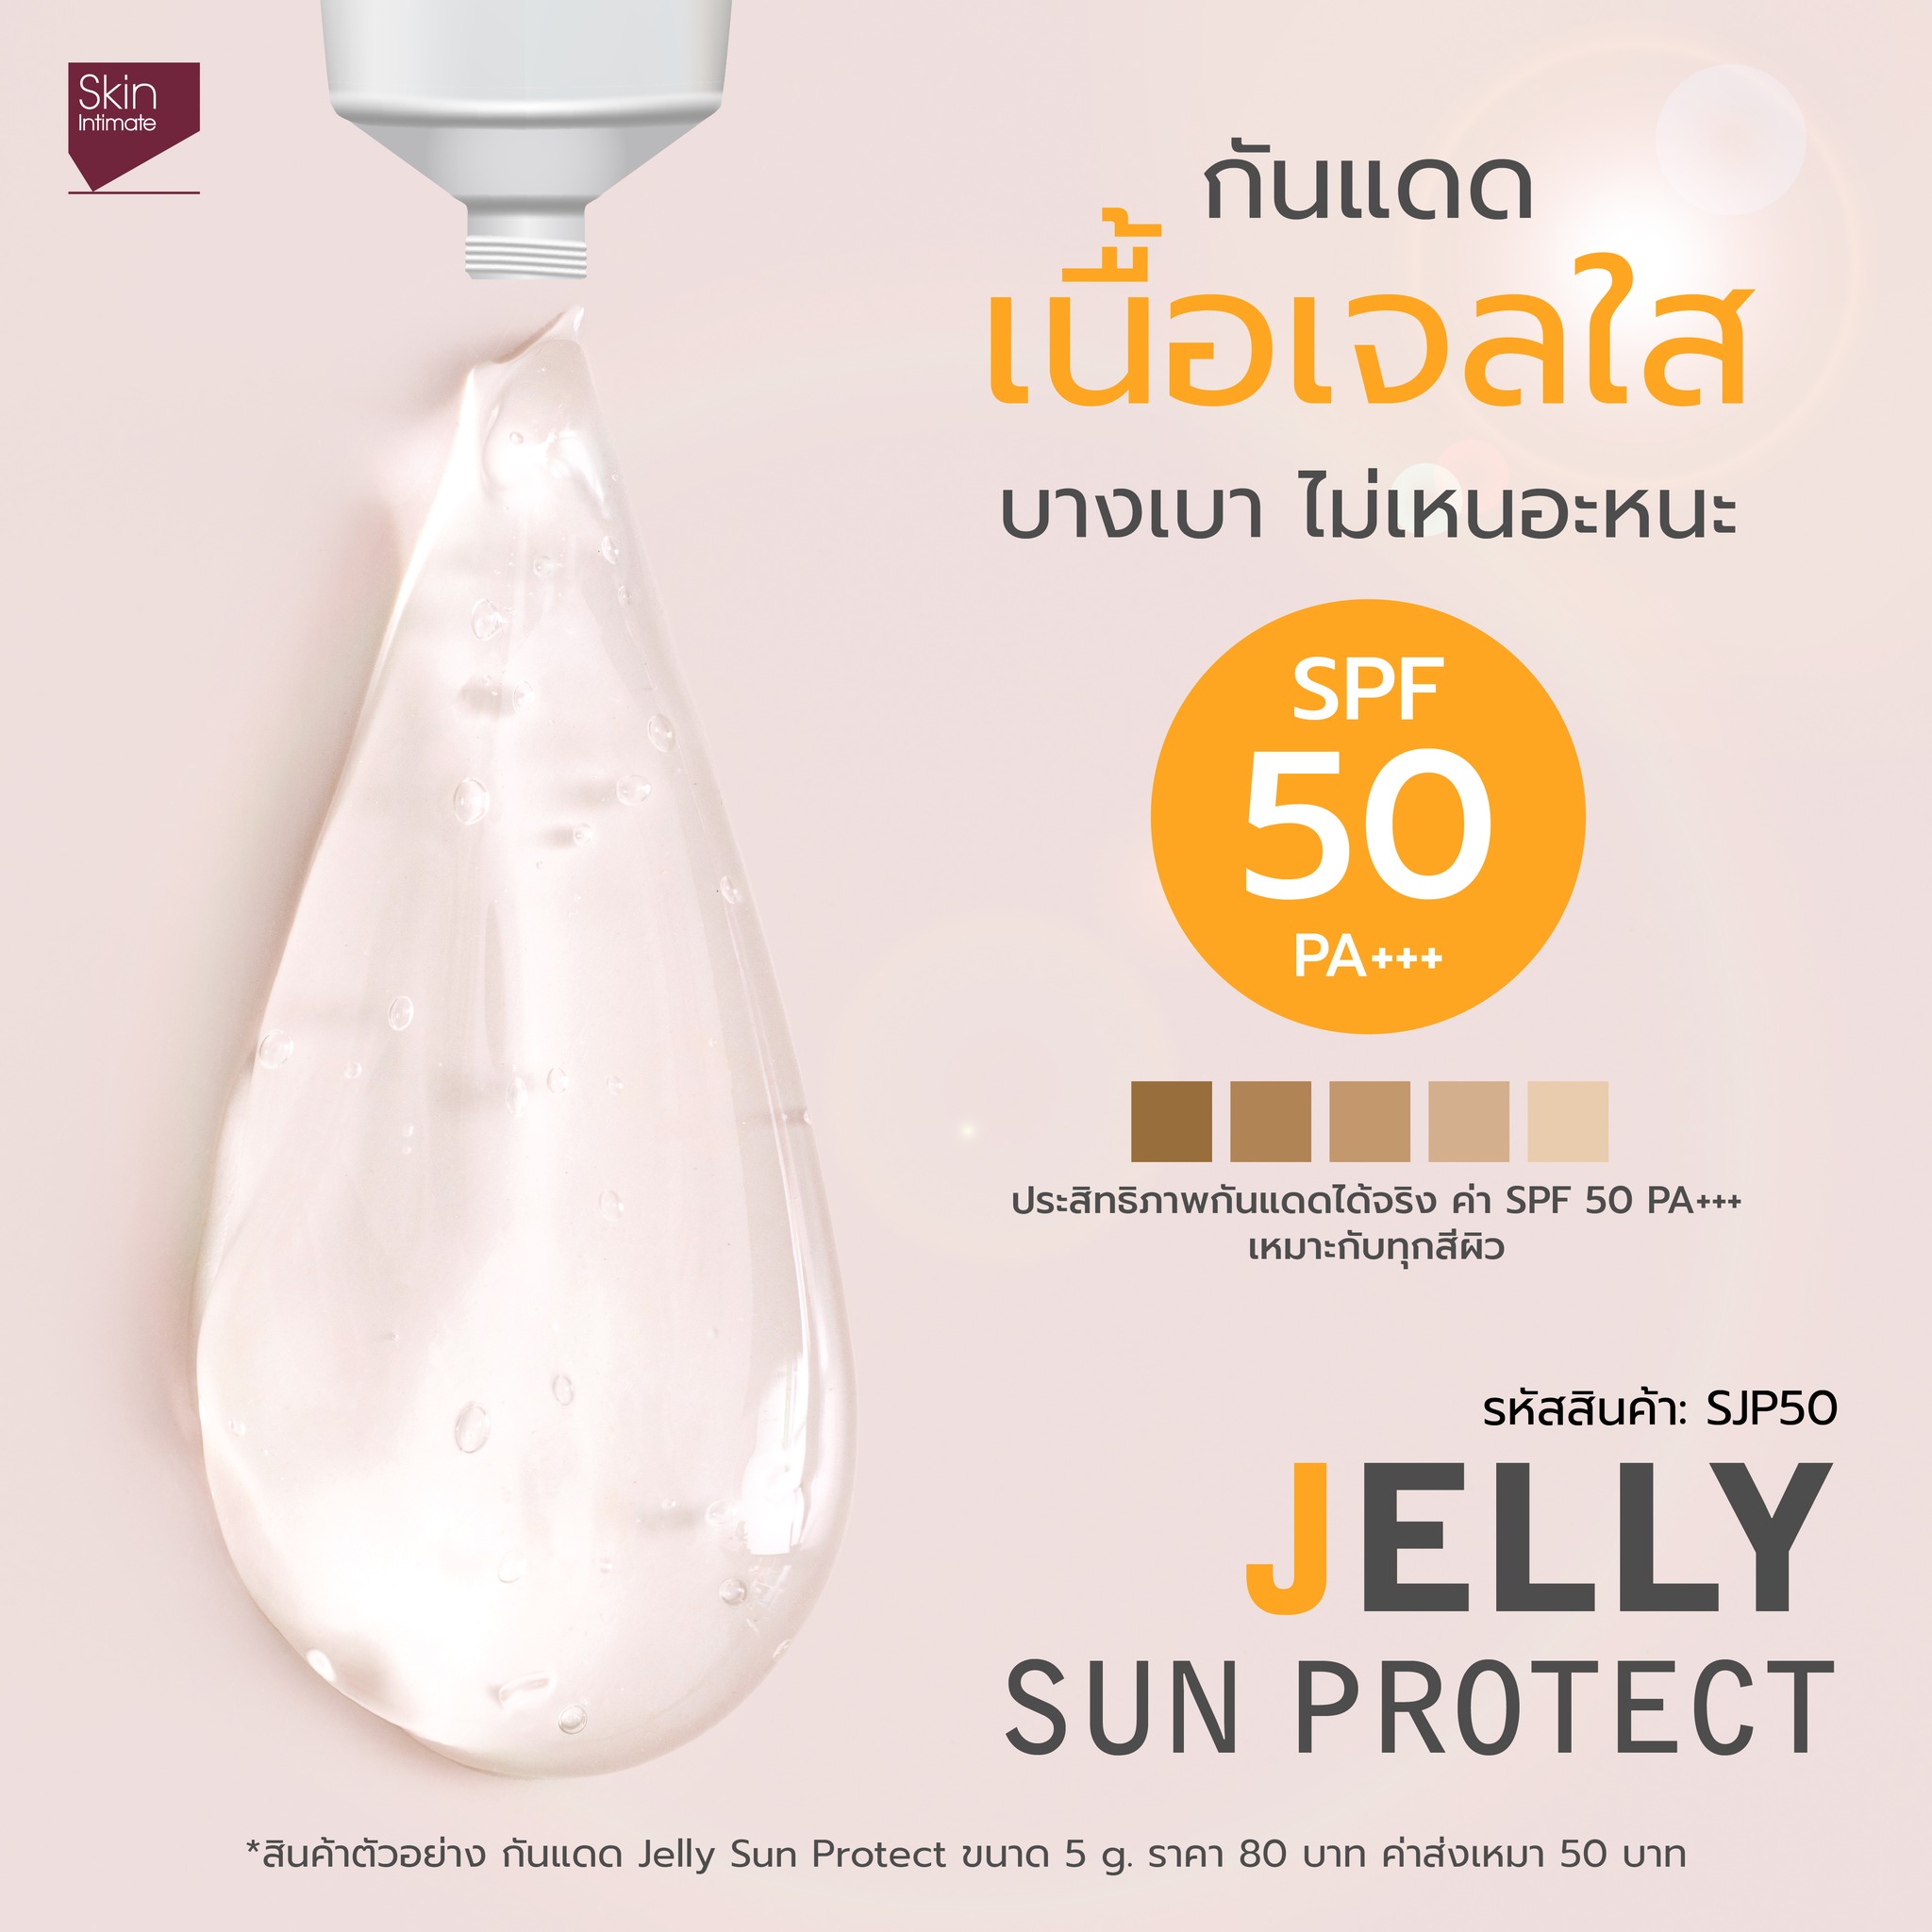 skin-intimate, Jelly Sun Protect